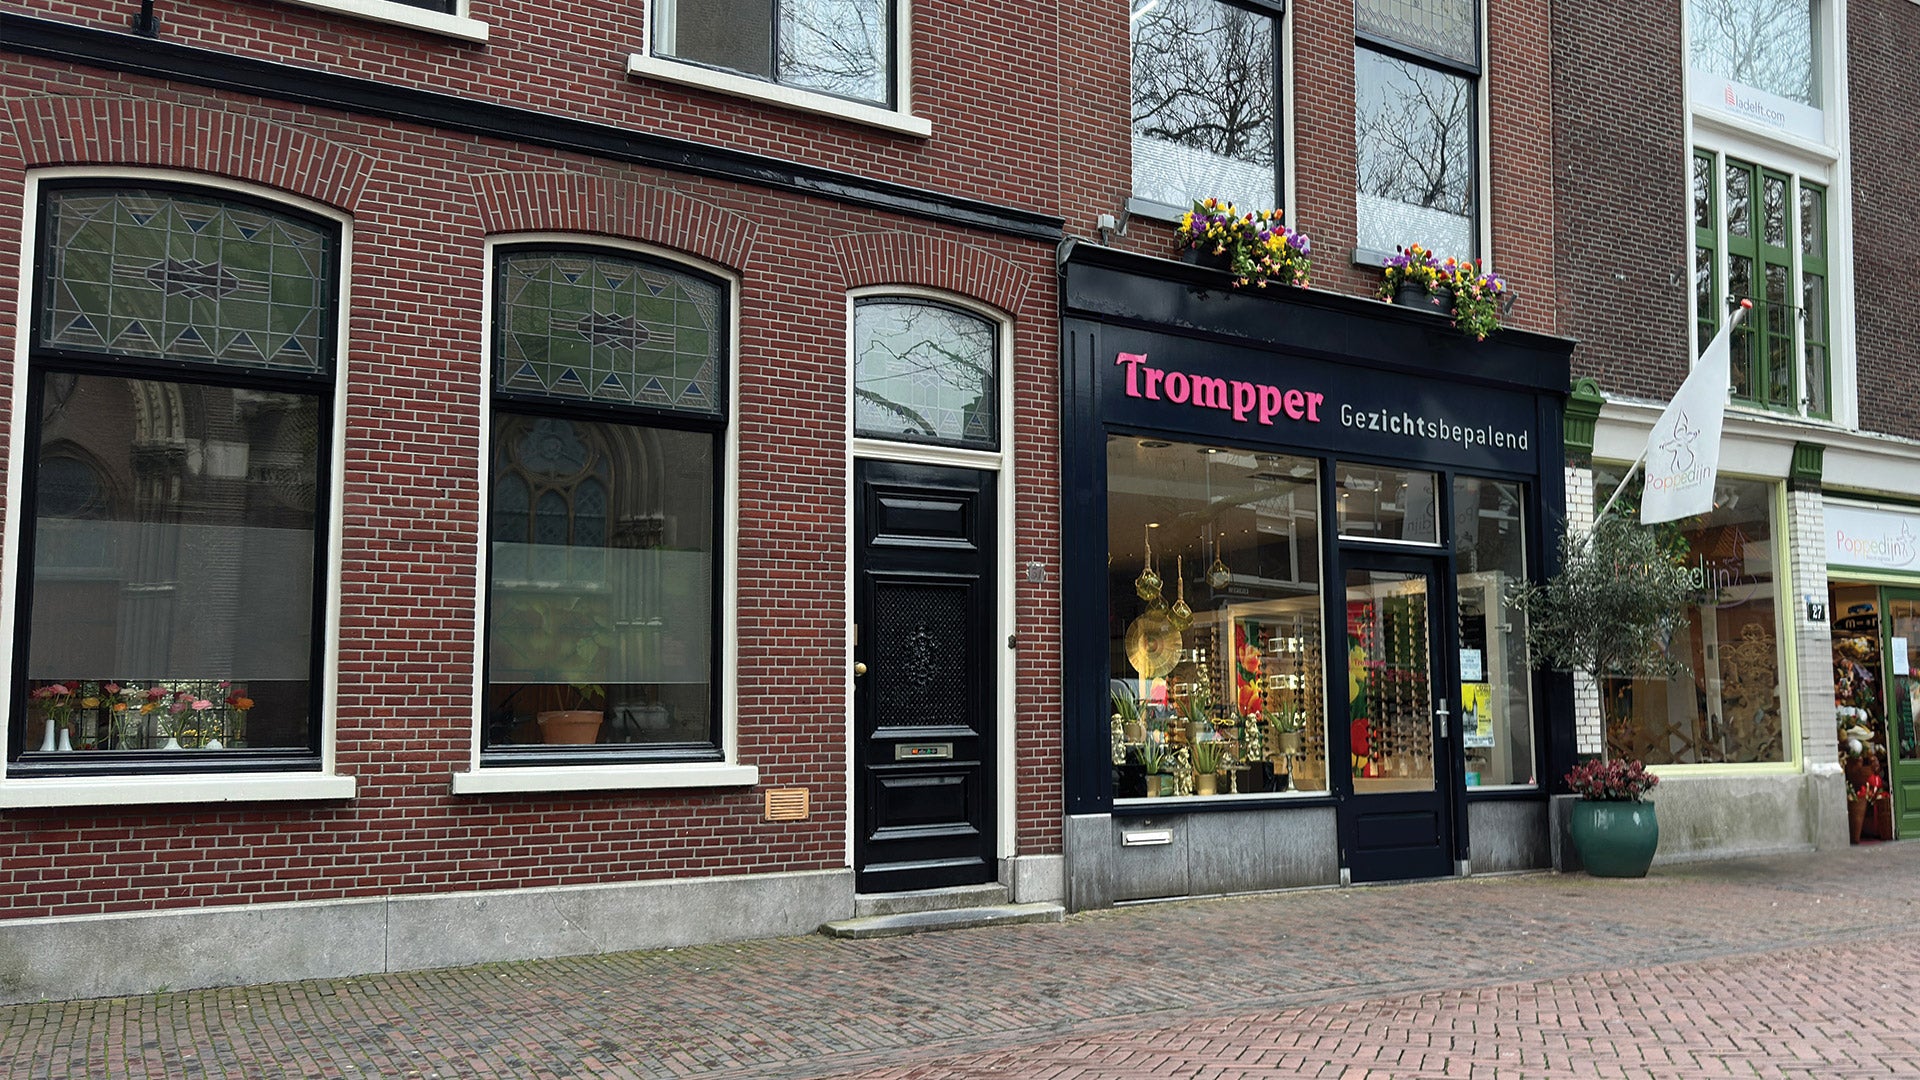 Trompper Optiek in Delft Logo Winkel Gezichtsbepalend.